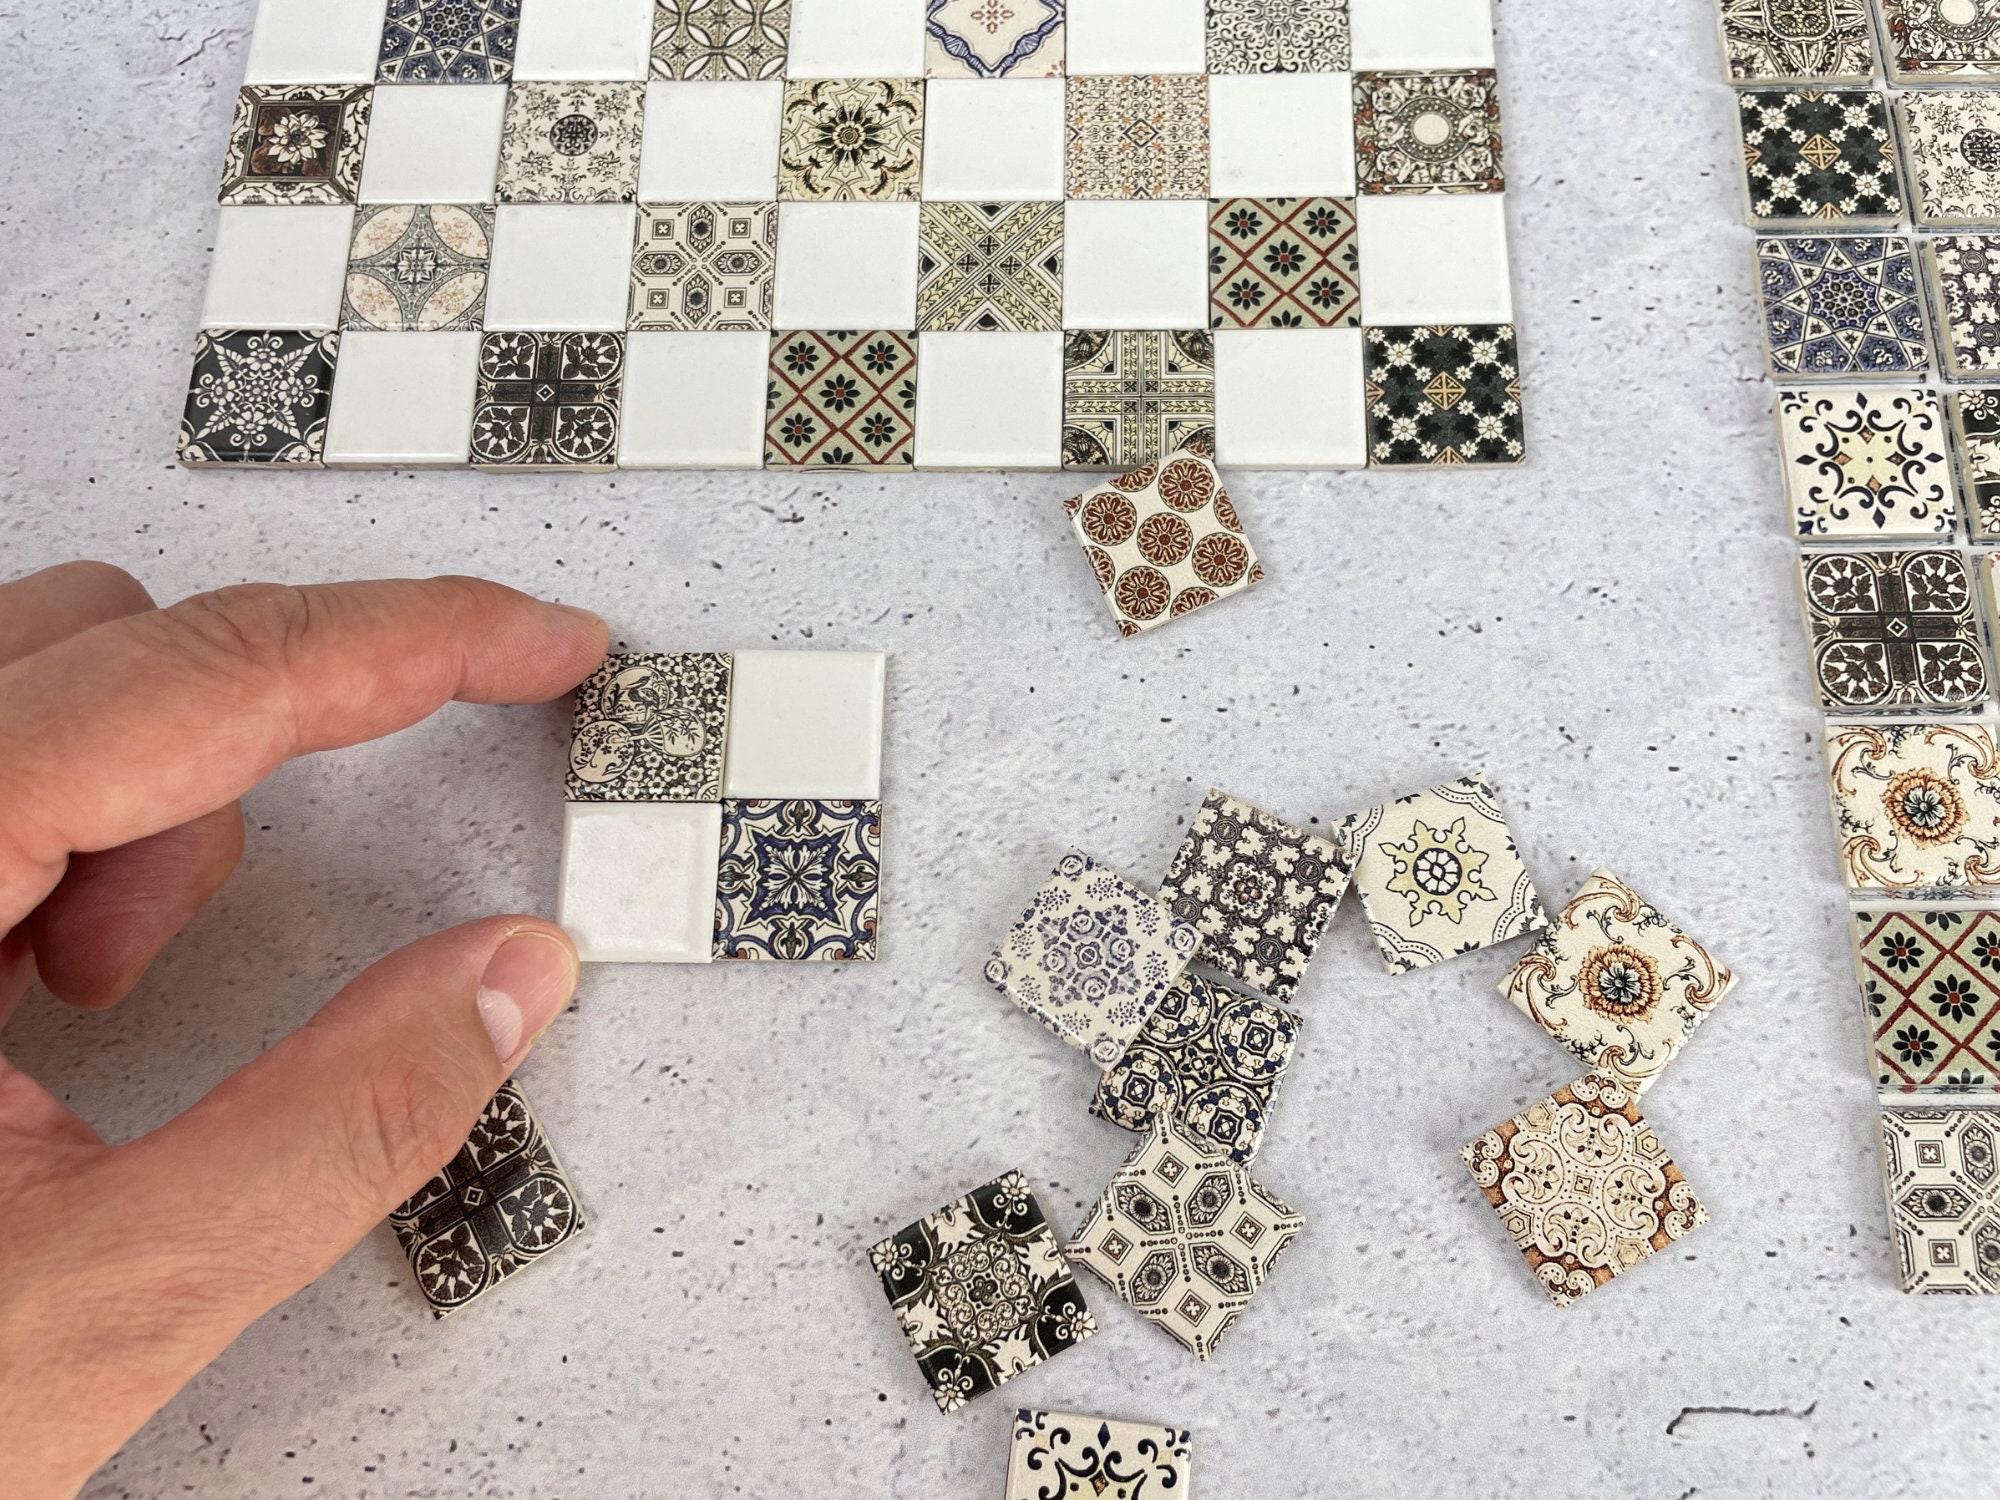 Dollhouse Tile Flooring, Miniature Ceramic Tiles for Realistic